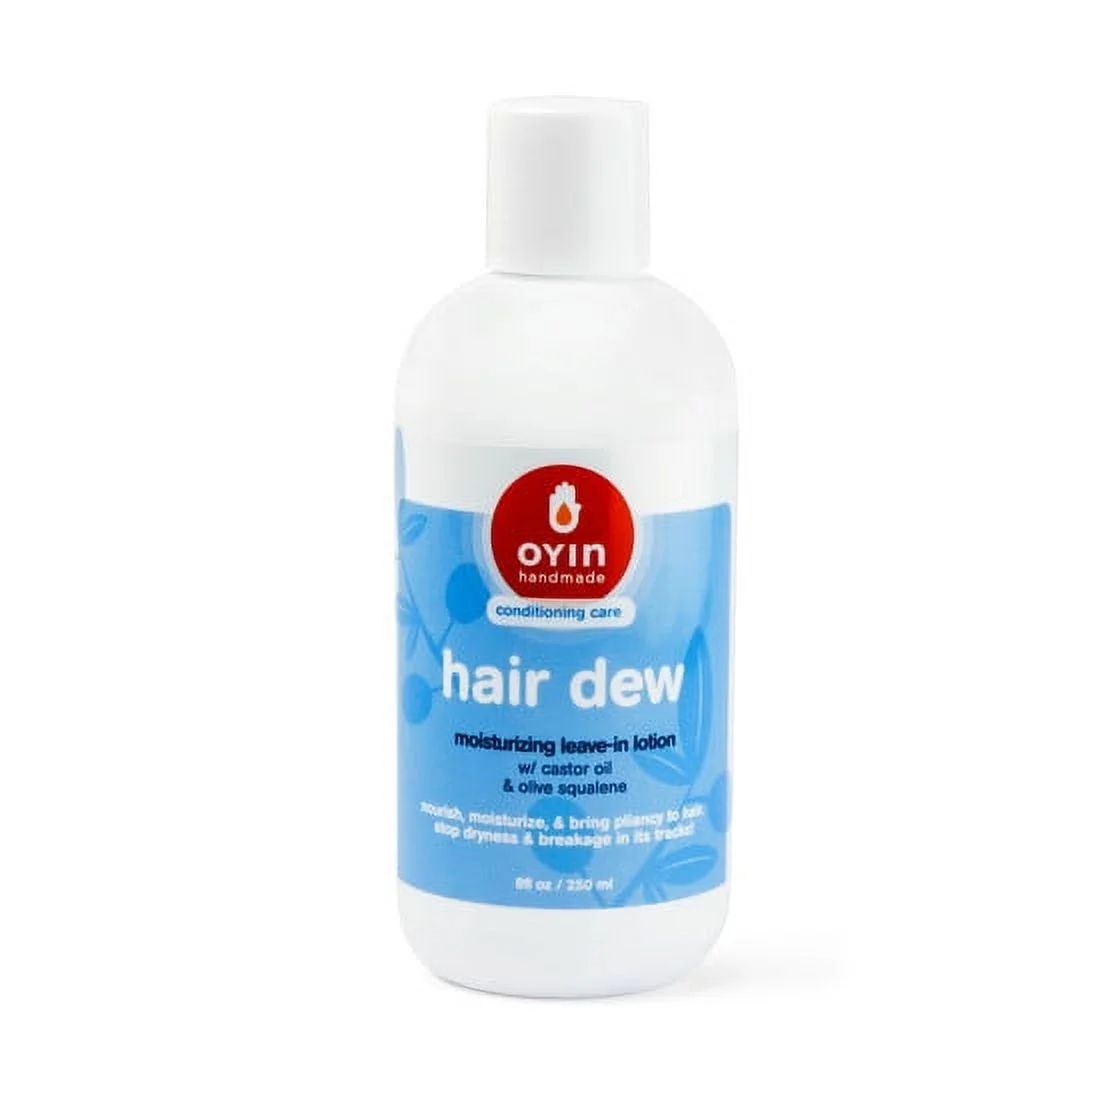 Oyin Handmade Hair Dew ~ moisturizing leave-in hair lotion | Walmart (US)